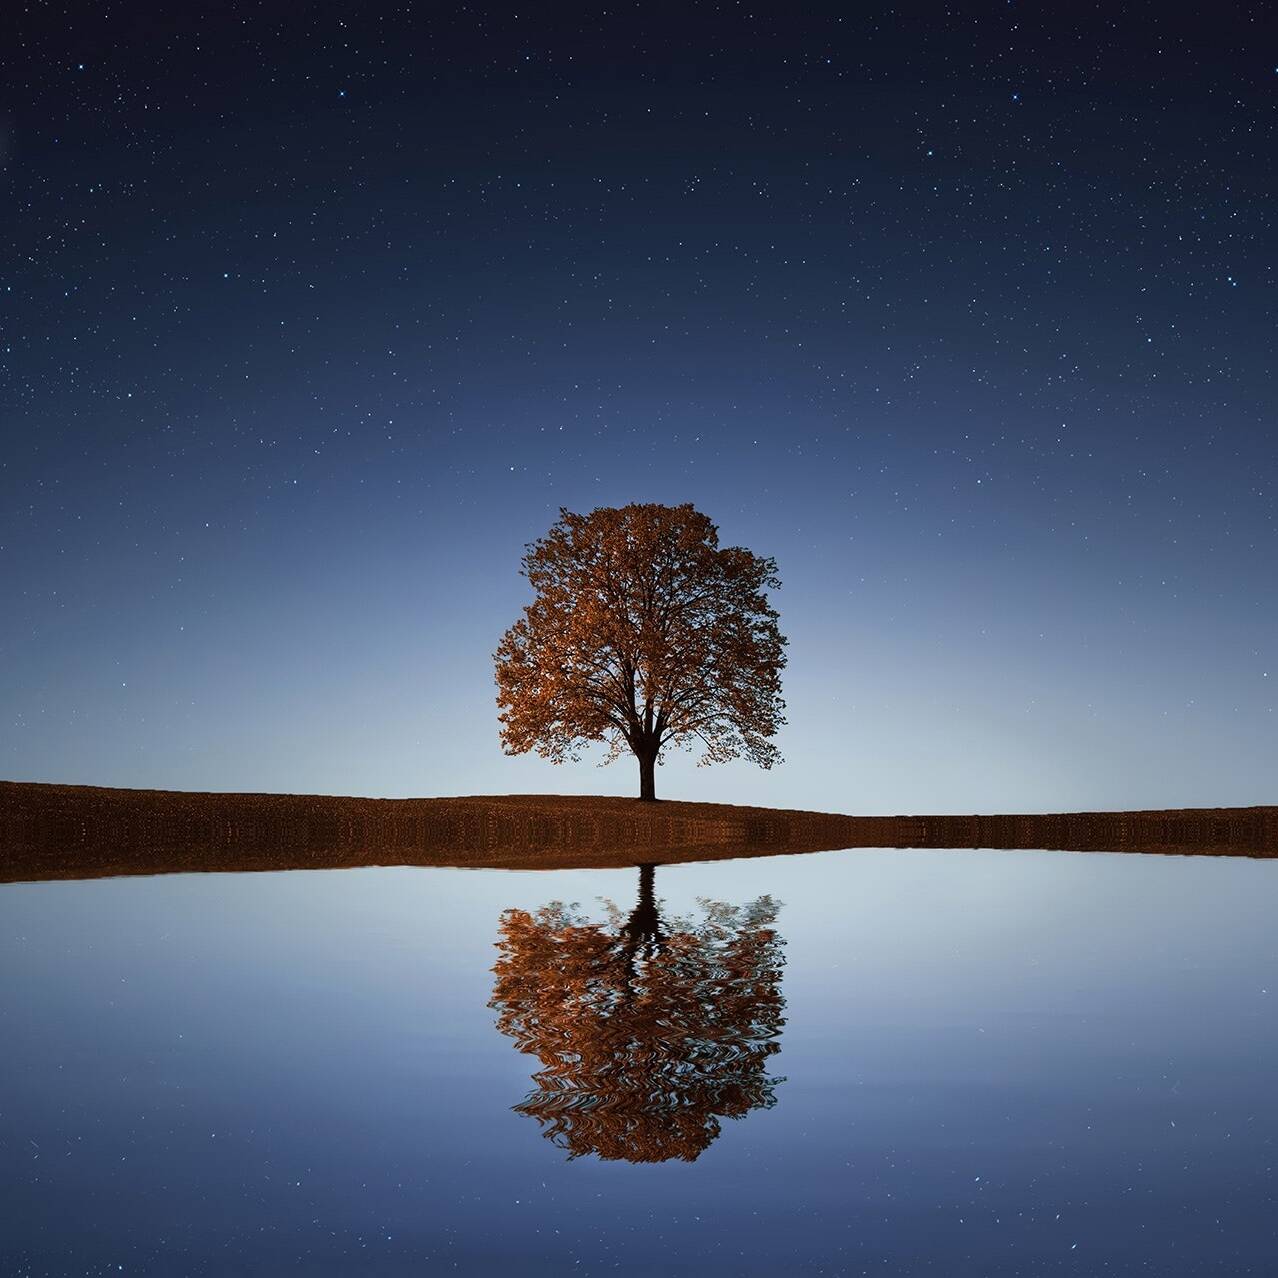 Single Tree, Nigh sky lake image with reflection